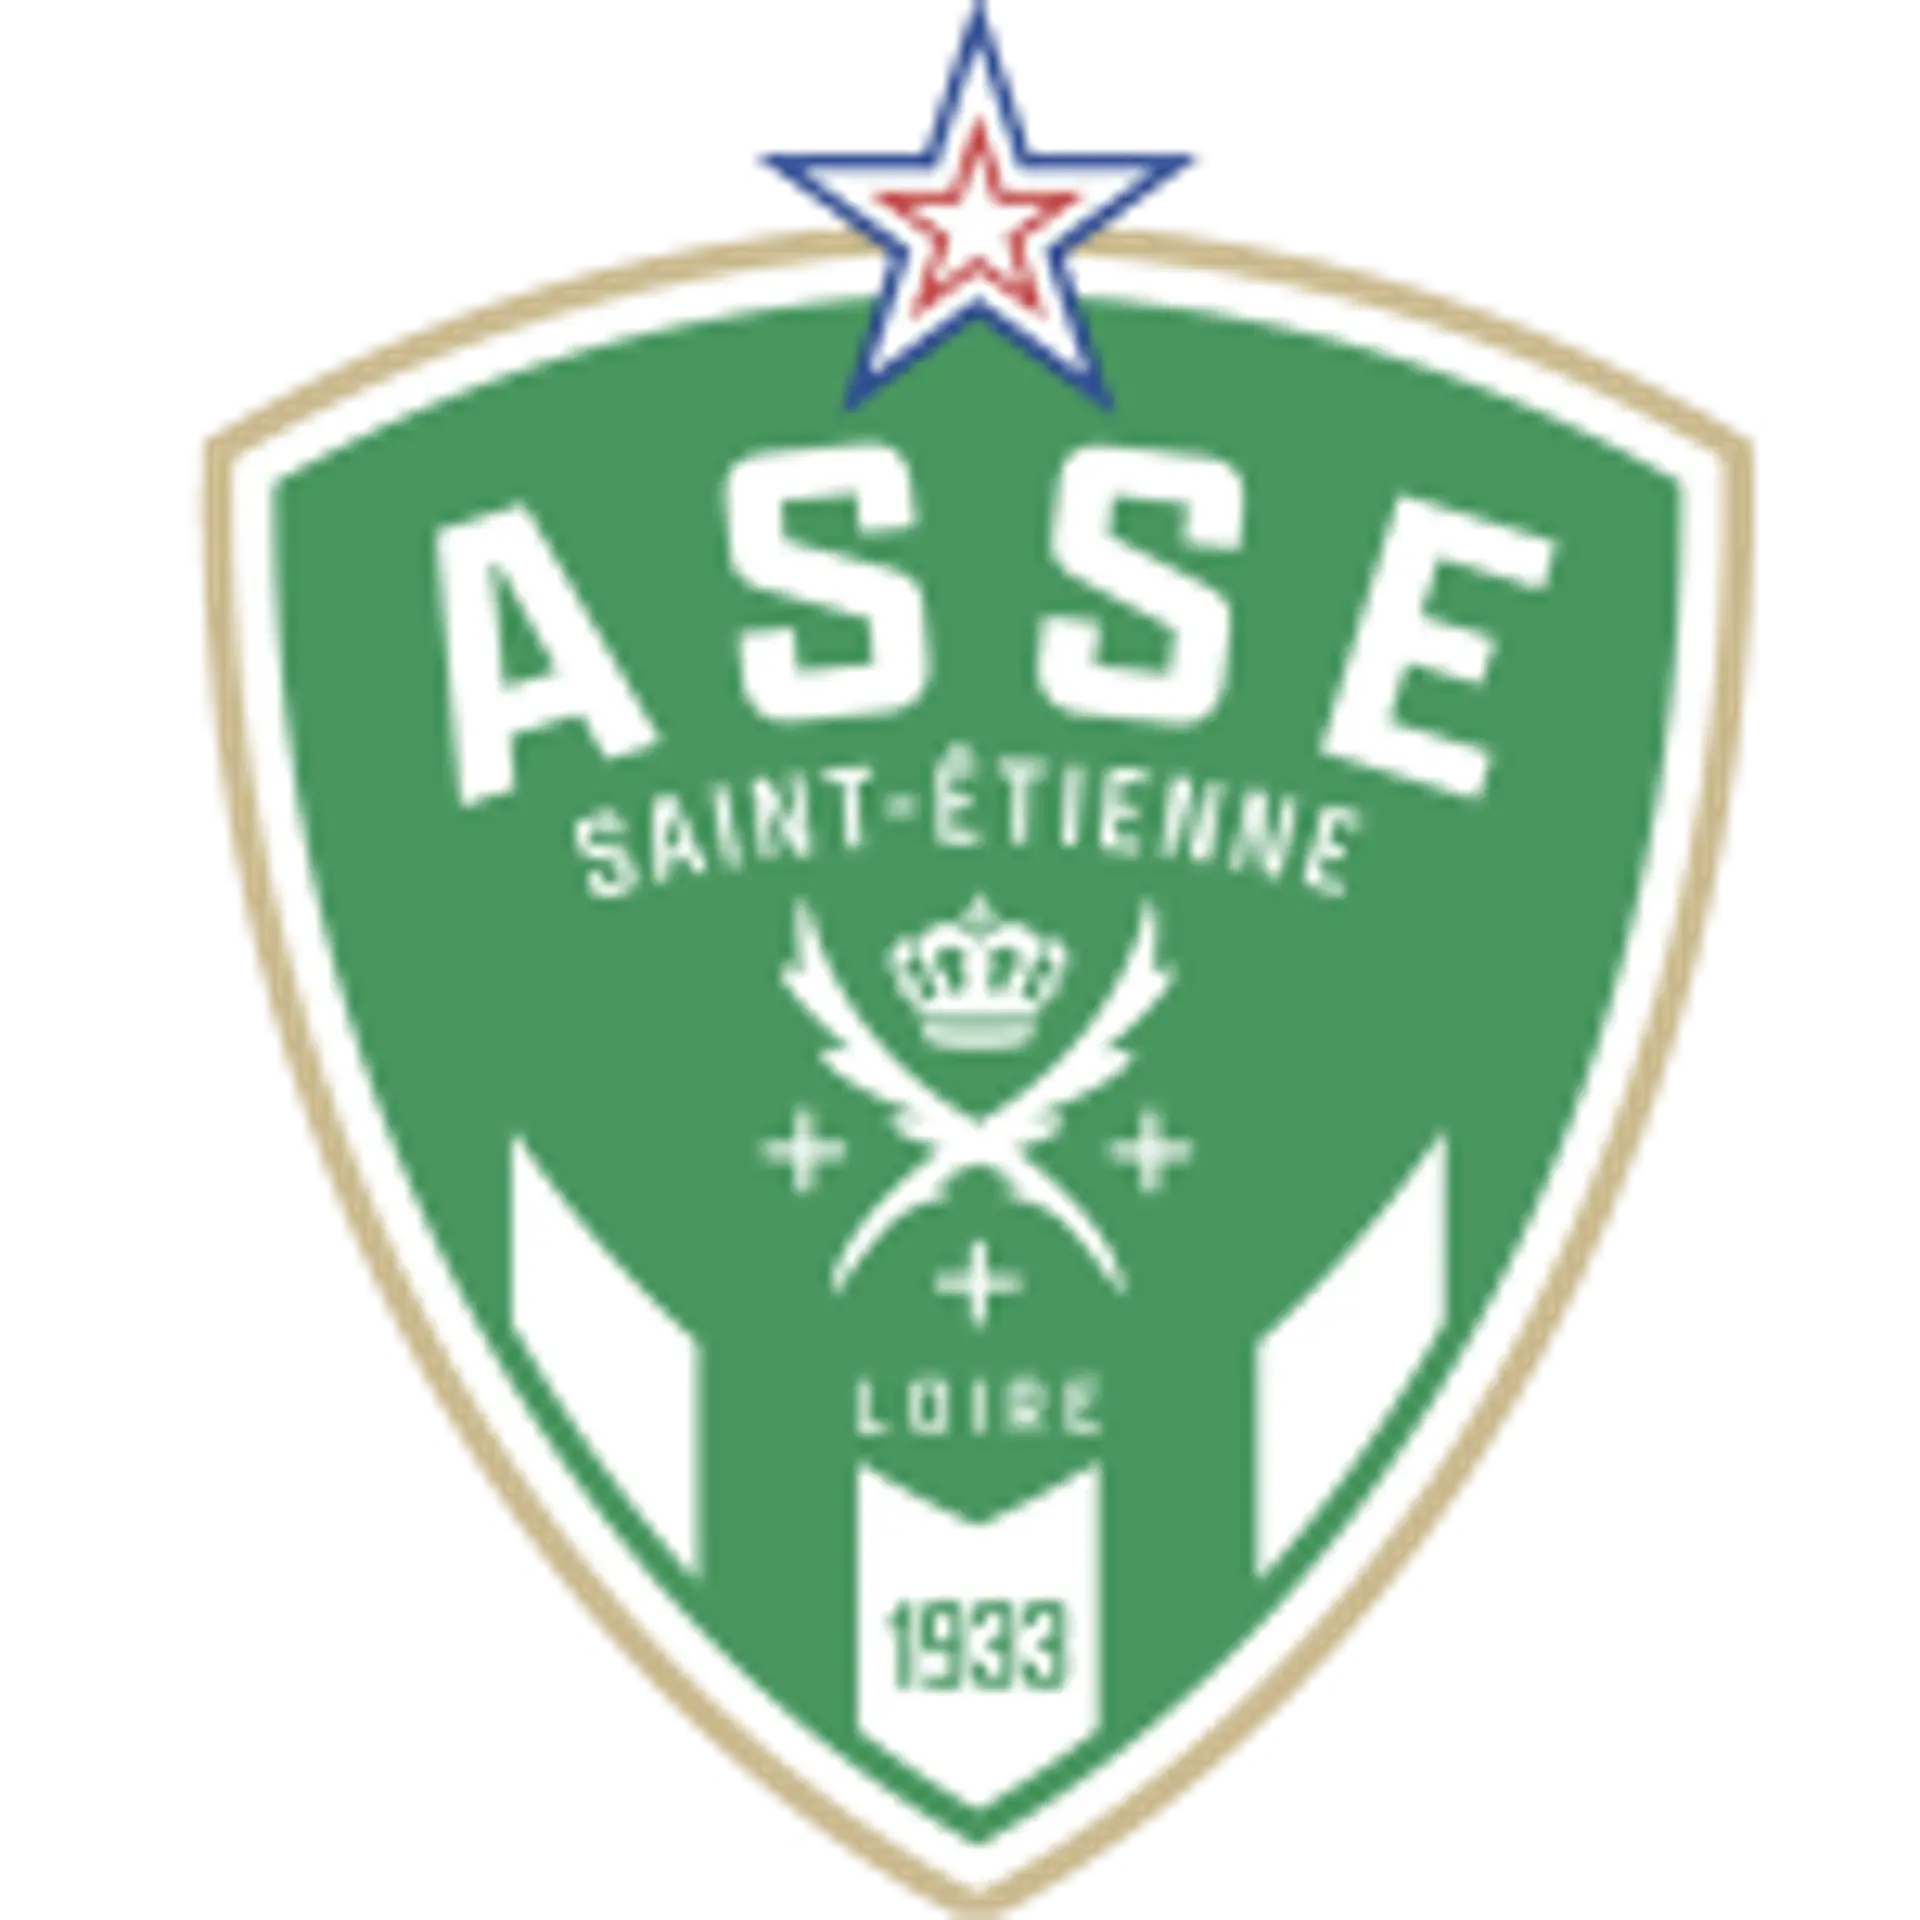 AS Saint-Etienne